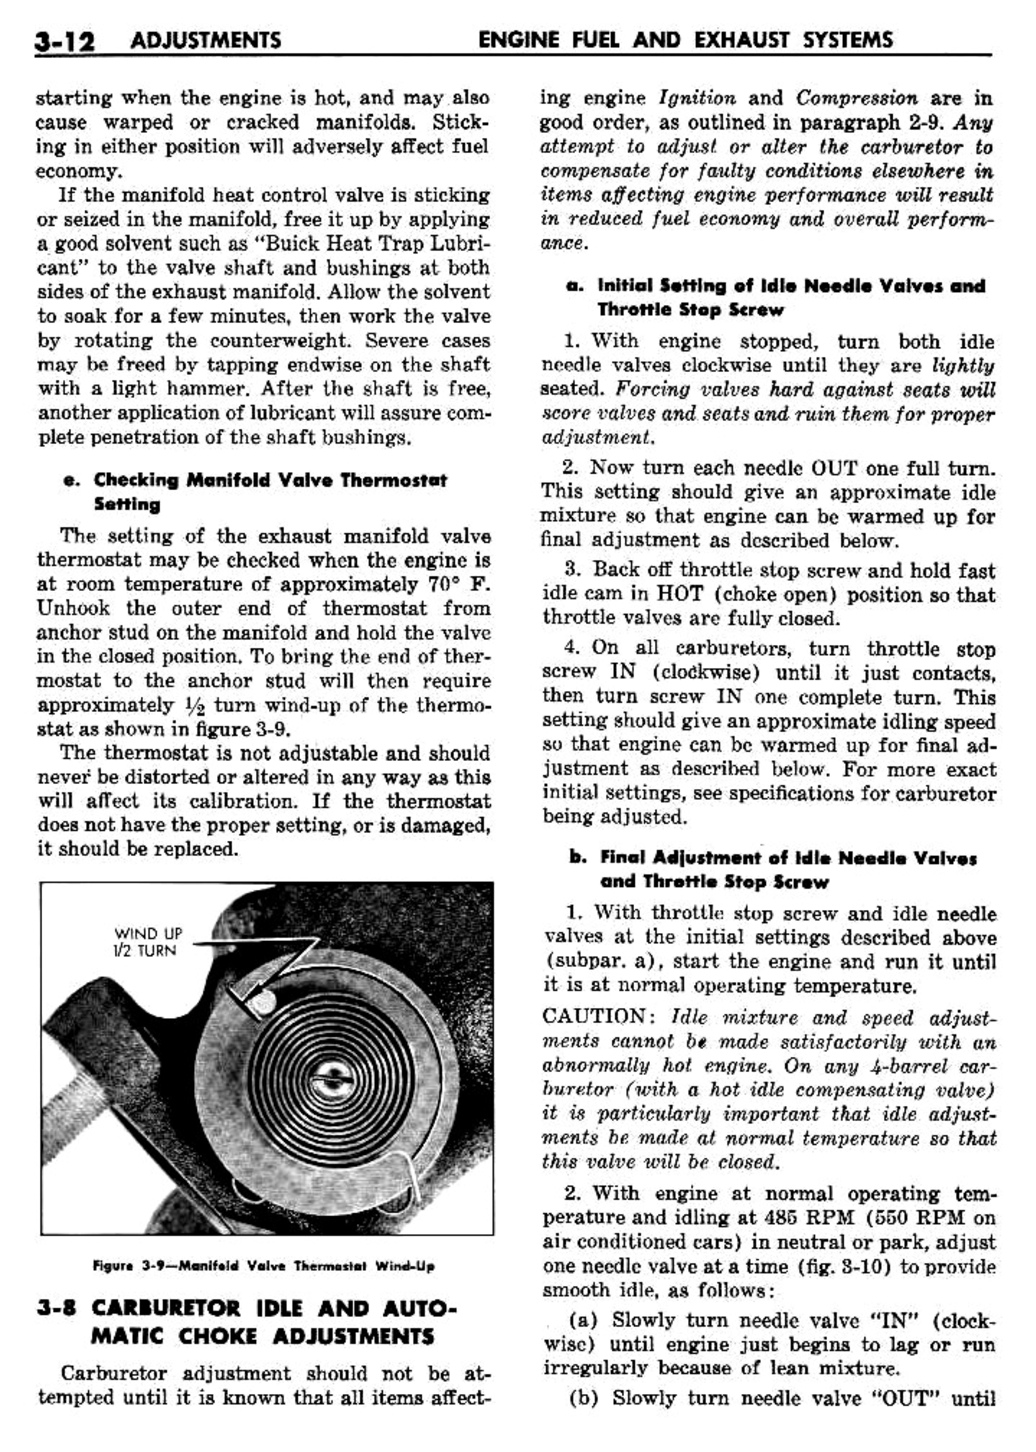 n_04 1960 Buick Shop Manual - Engine Fuel & Exhaust-012-012.jpg